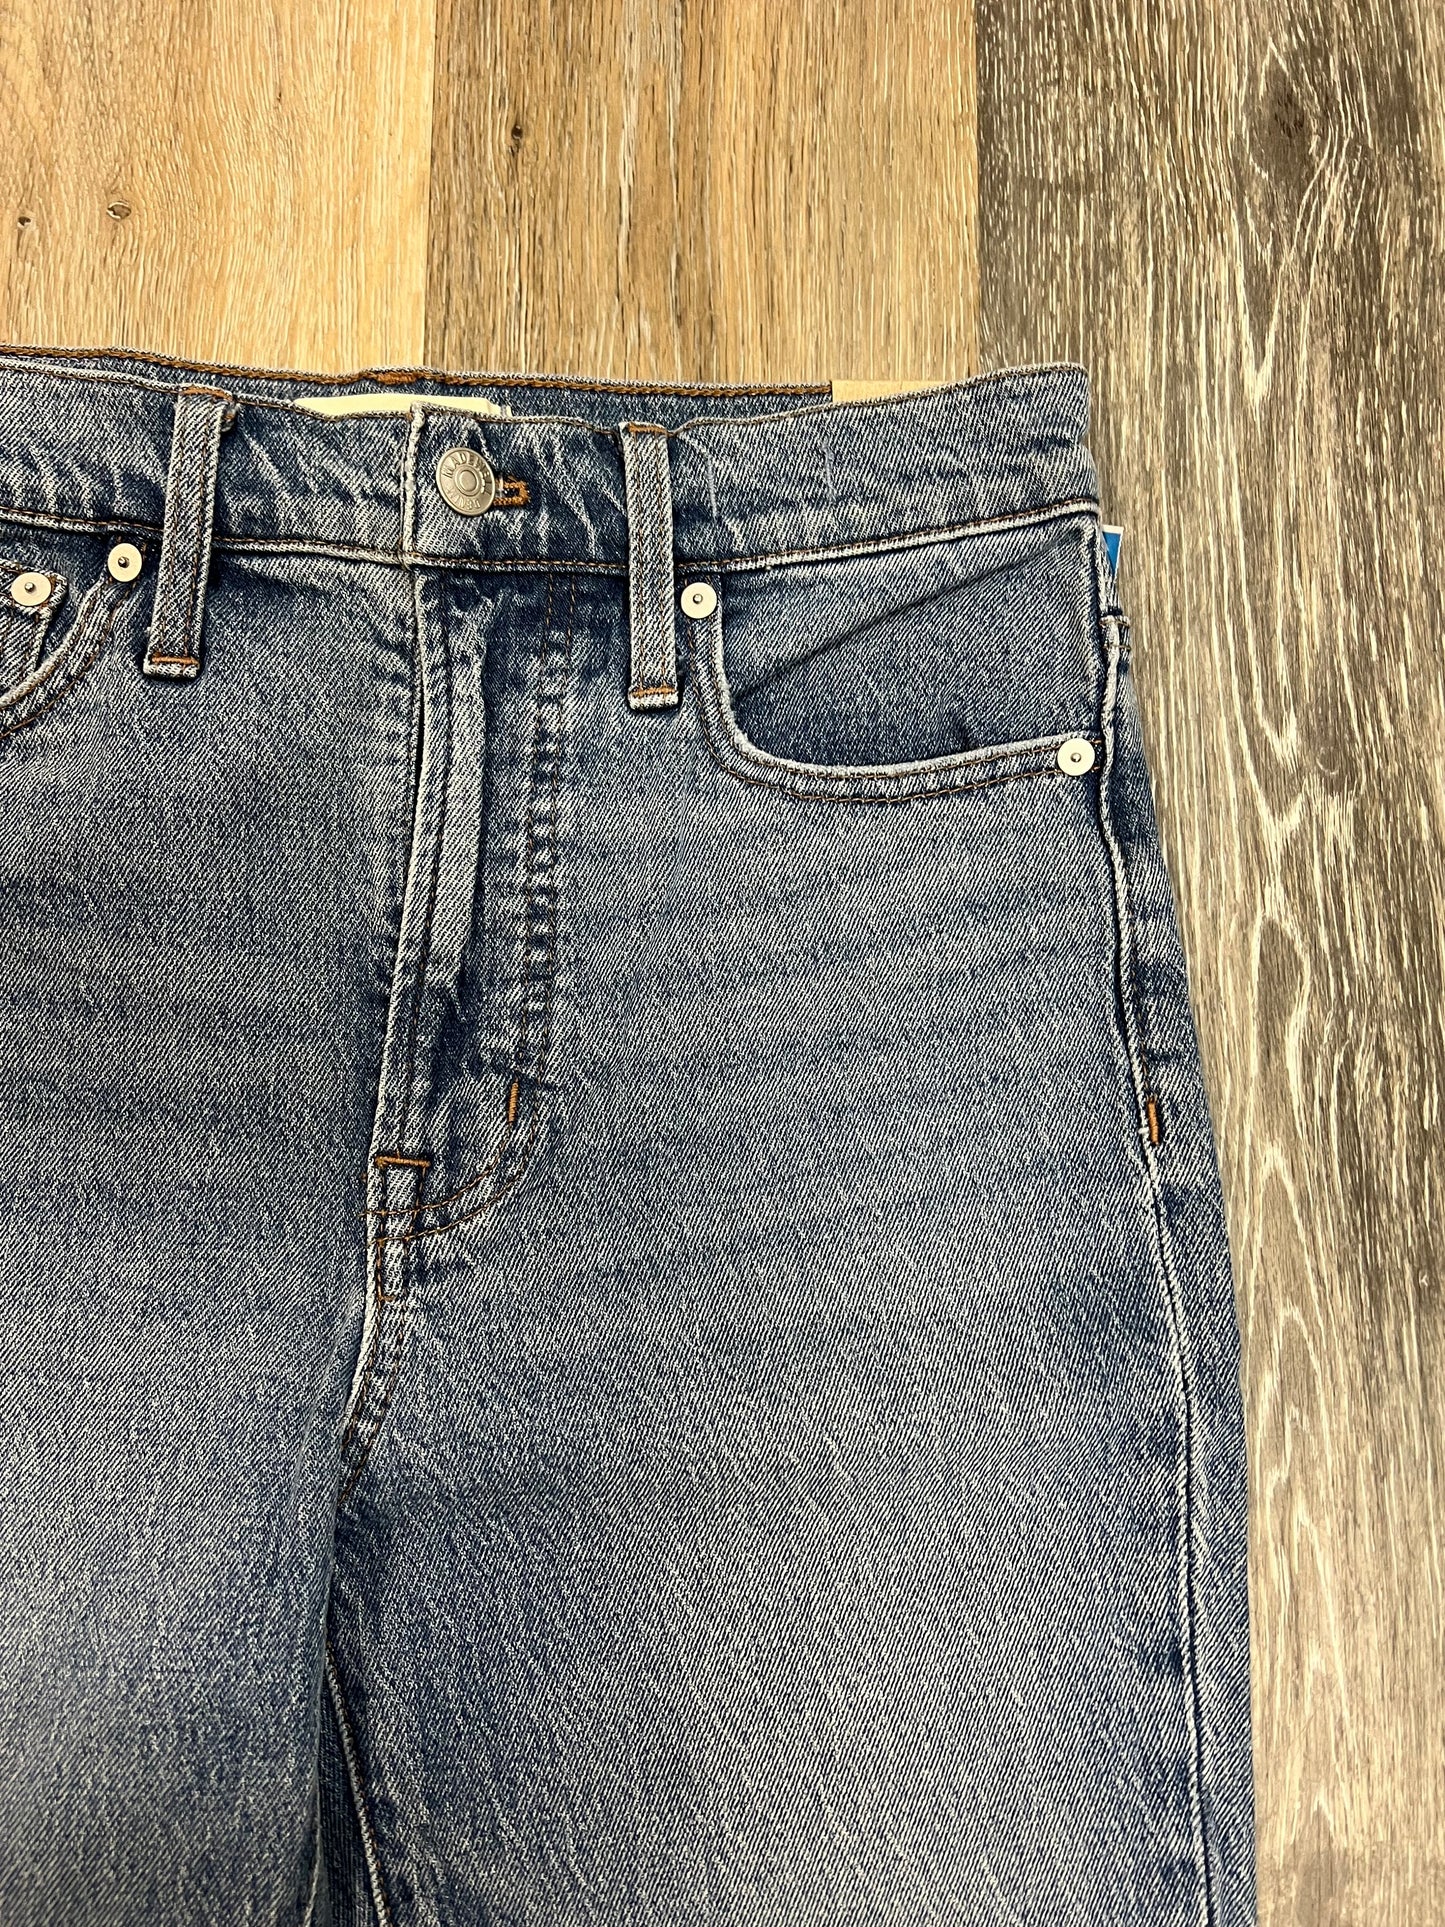 Blue Denim Jeans Straight Madewell, Size 1/25